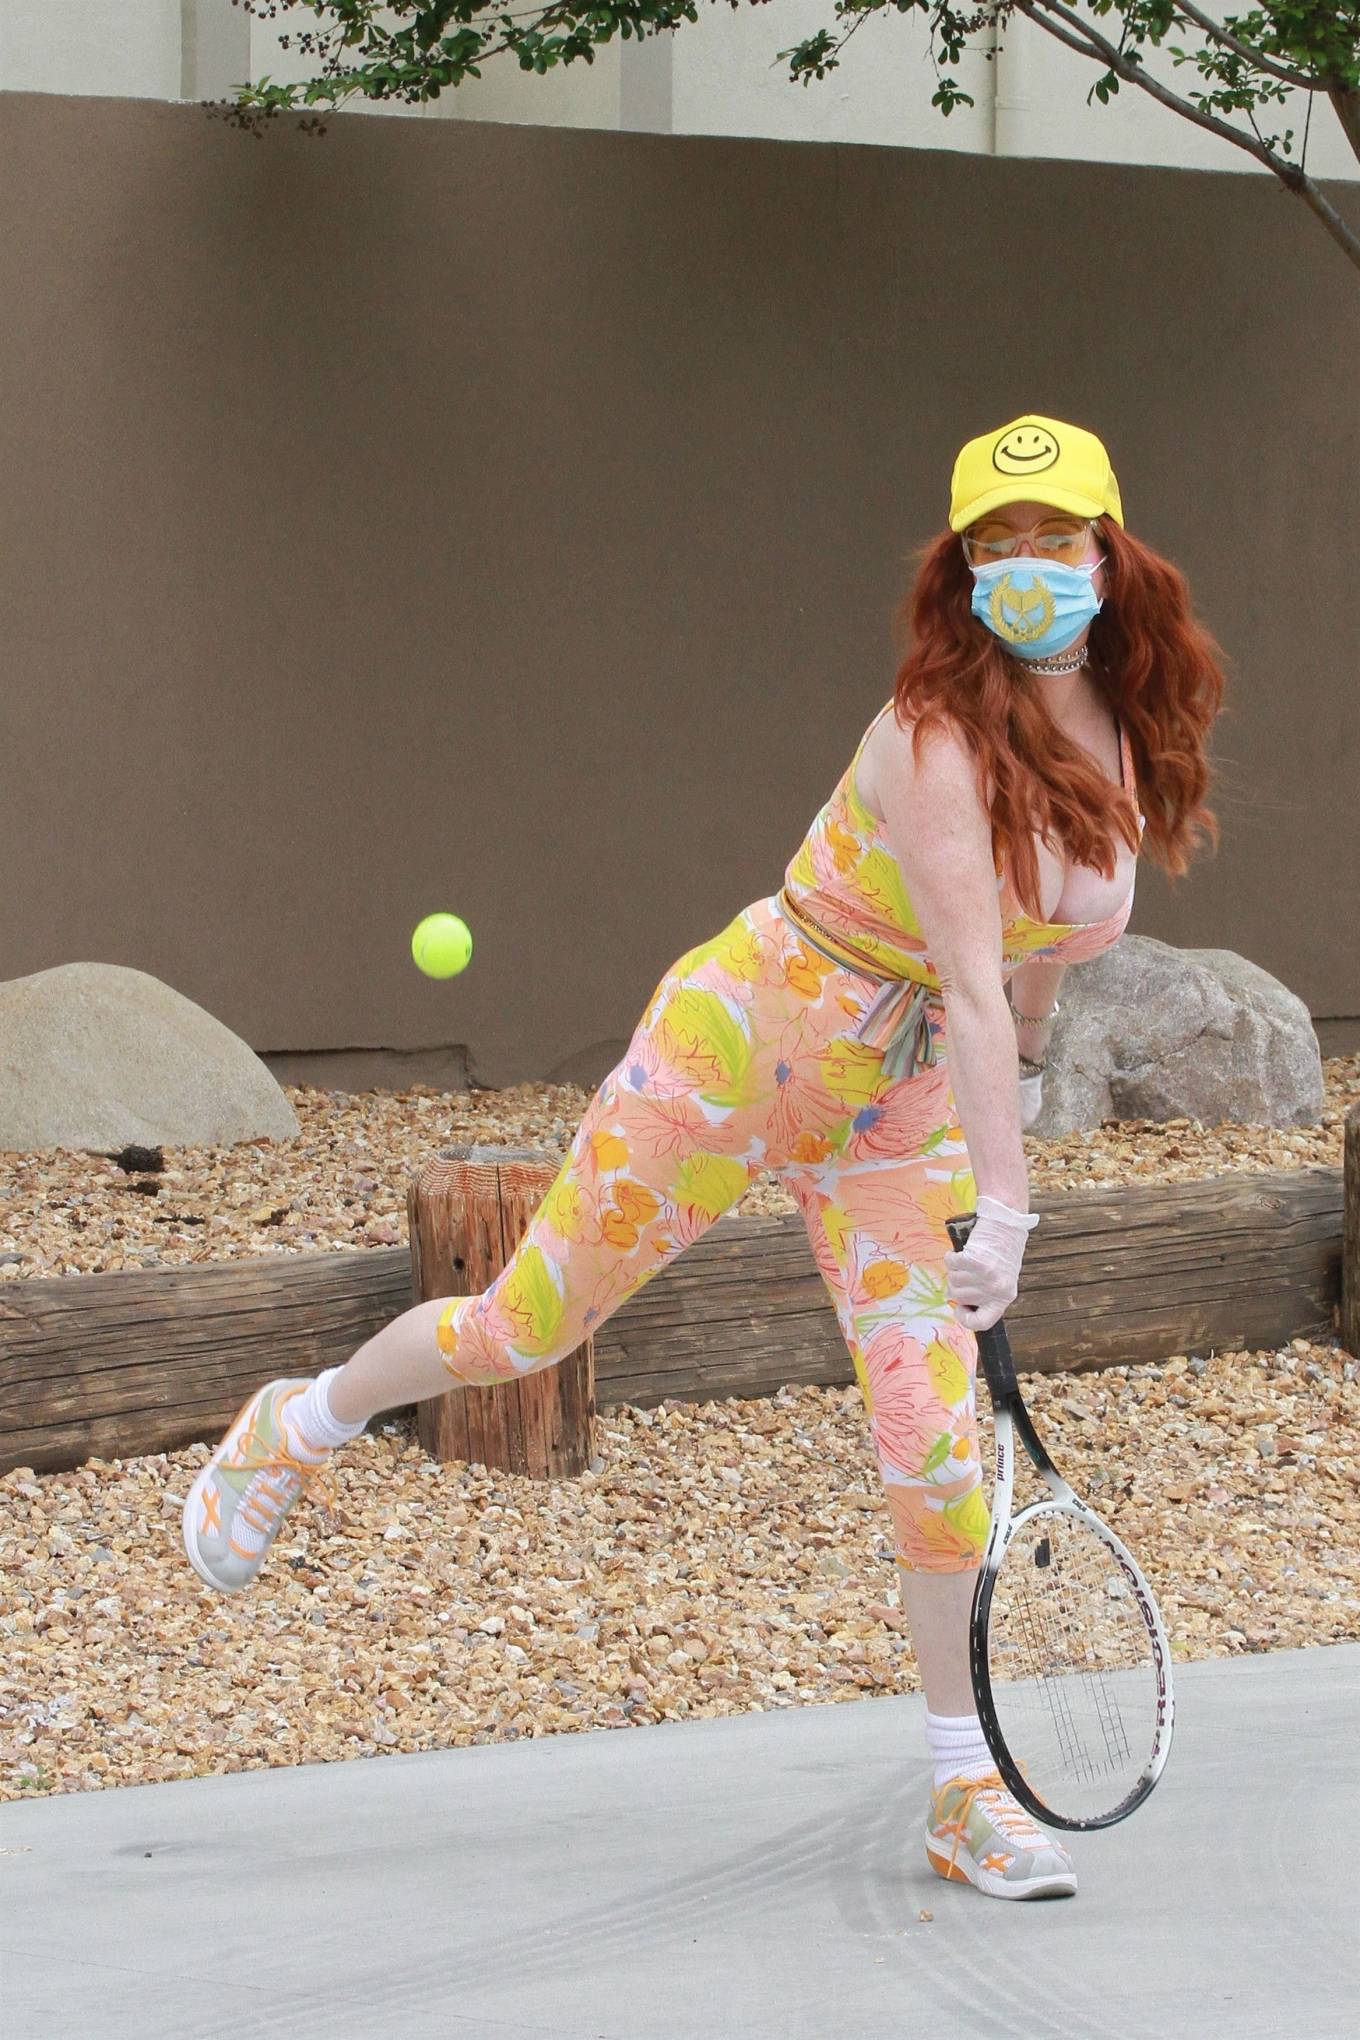 Phoebe Price â€“ Tennis photoshoot during Quarantine